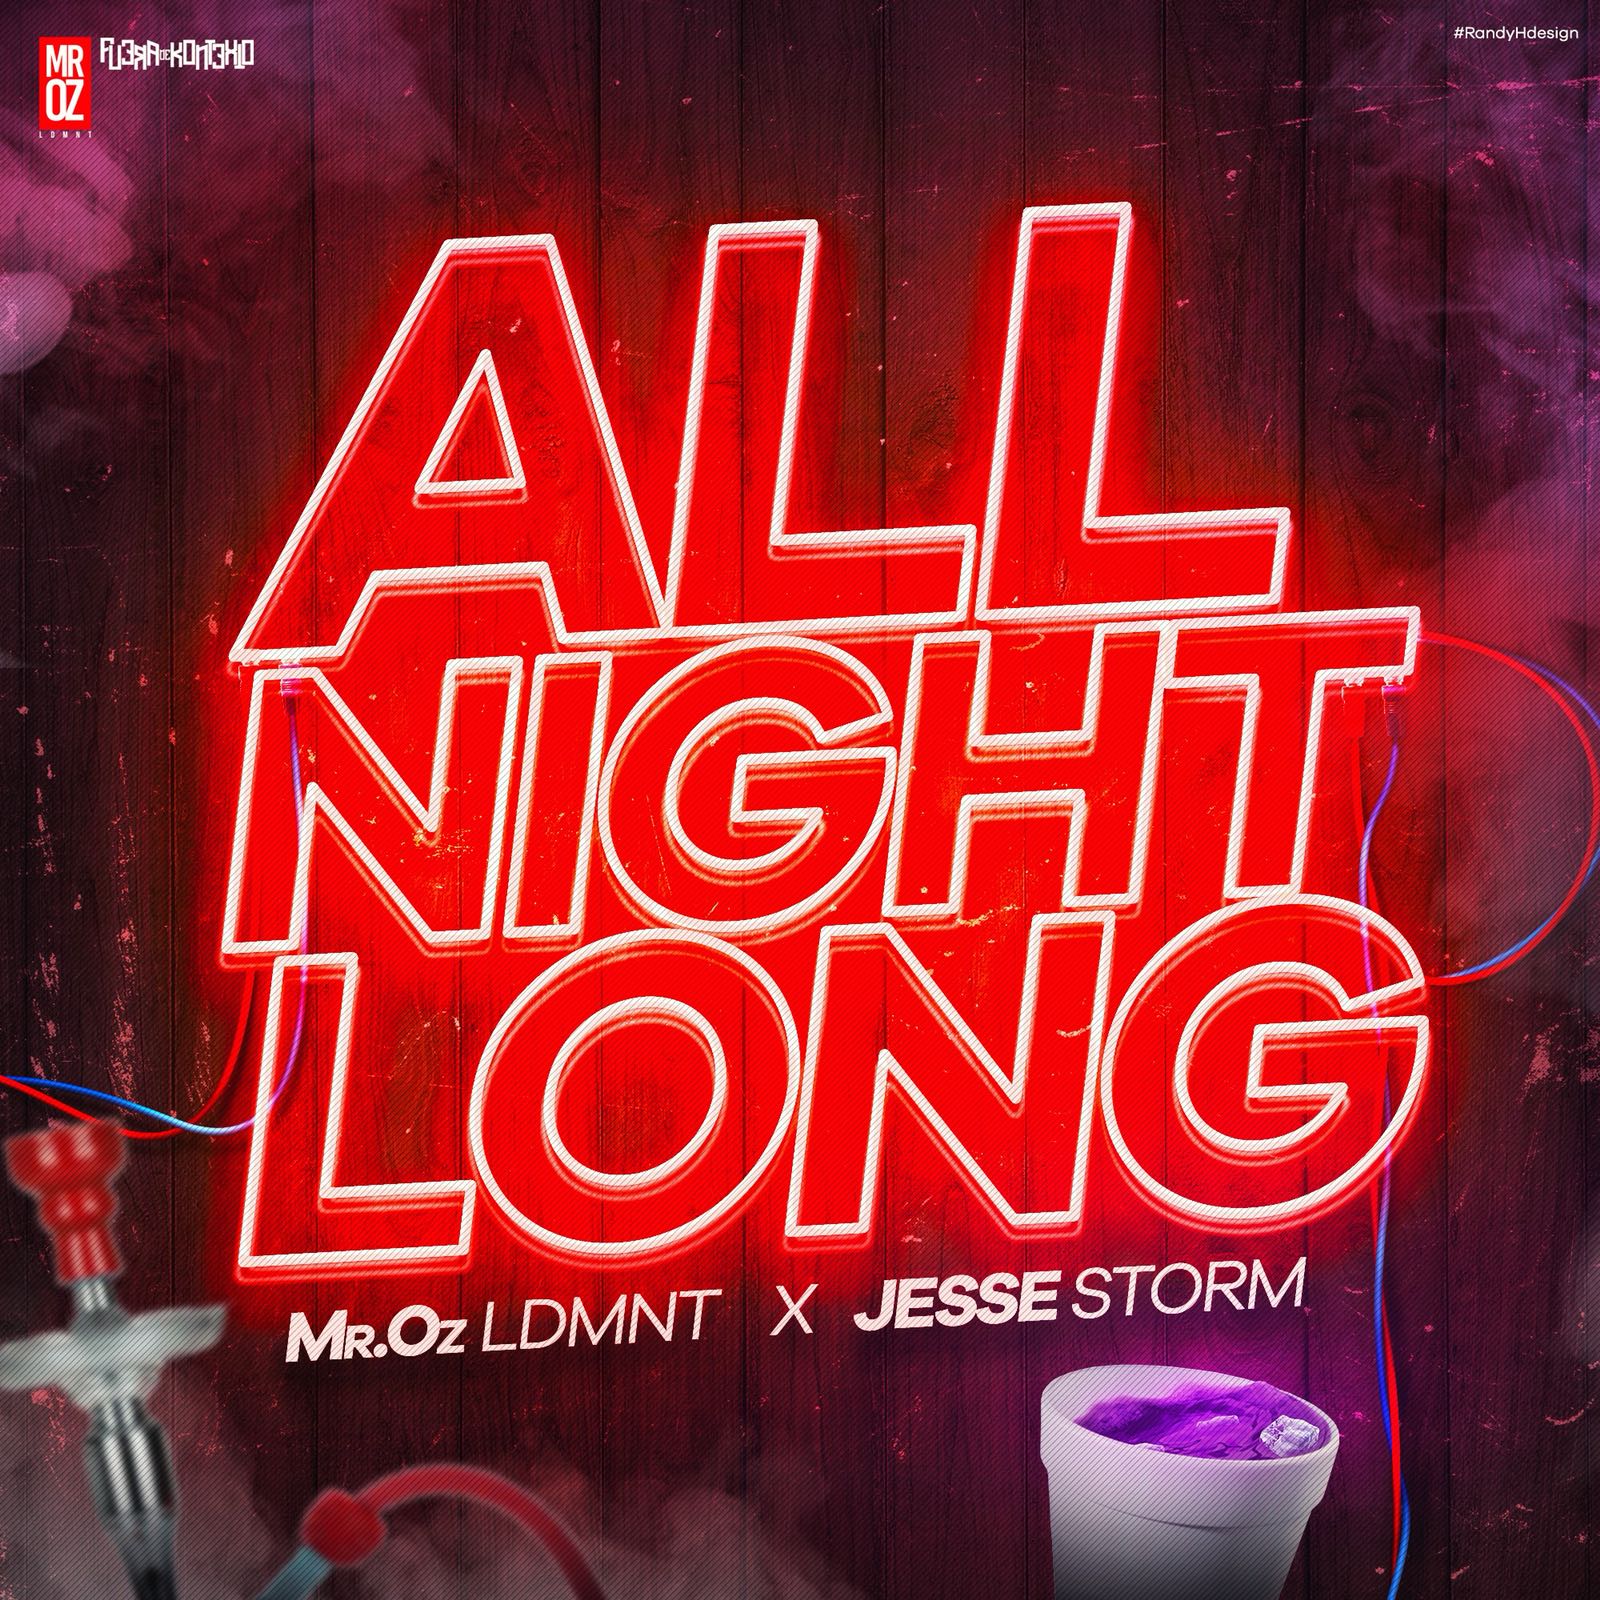 Mr.Oz LDMNT Ft Jesse Storm - All Night Long